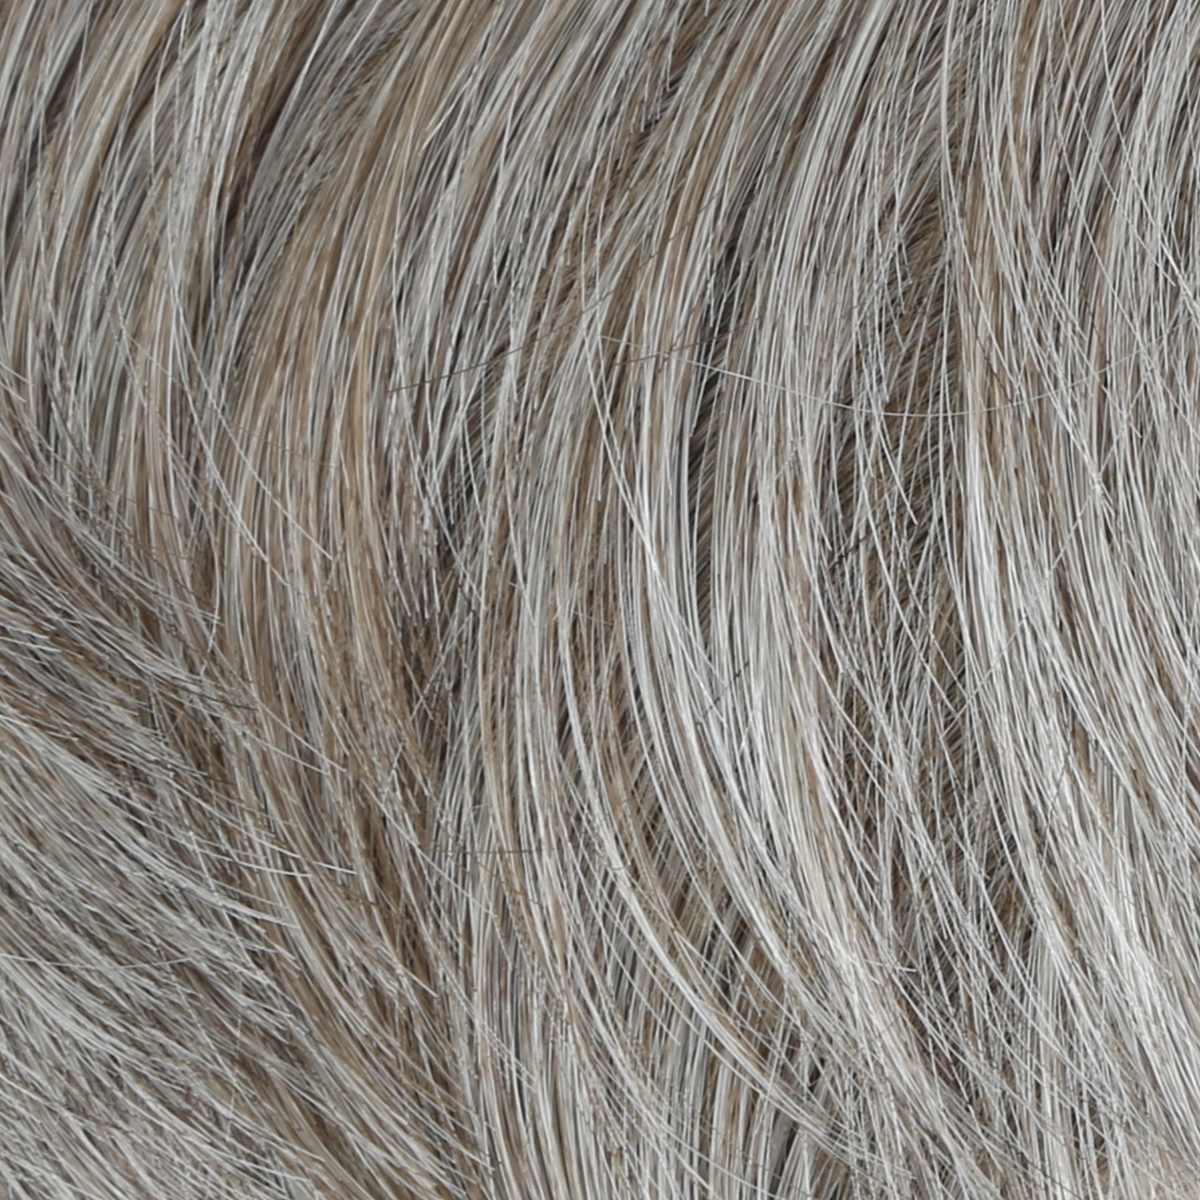 M51S 50% Grey - Light Ash Blonde